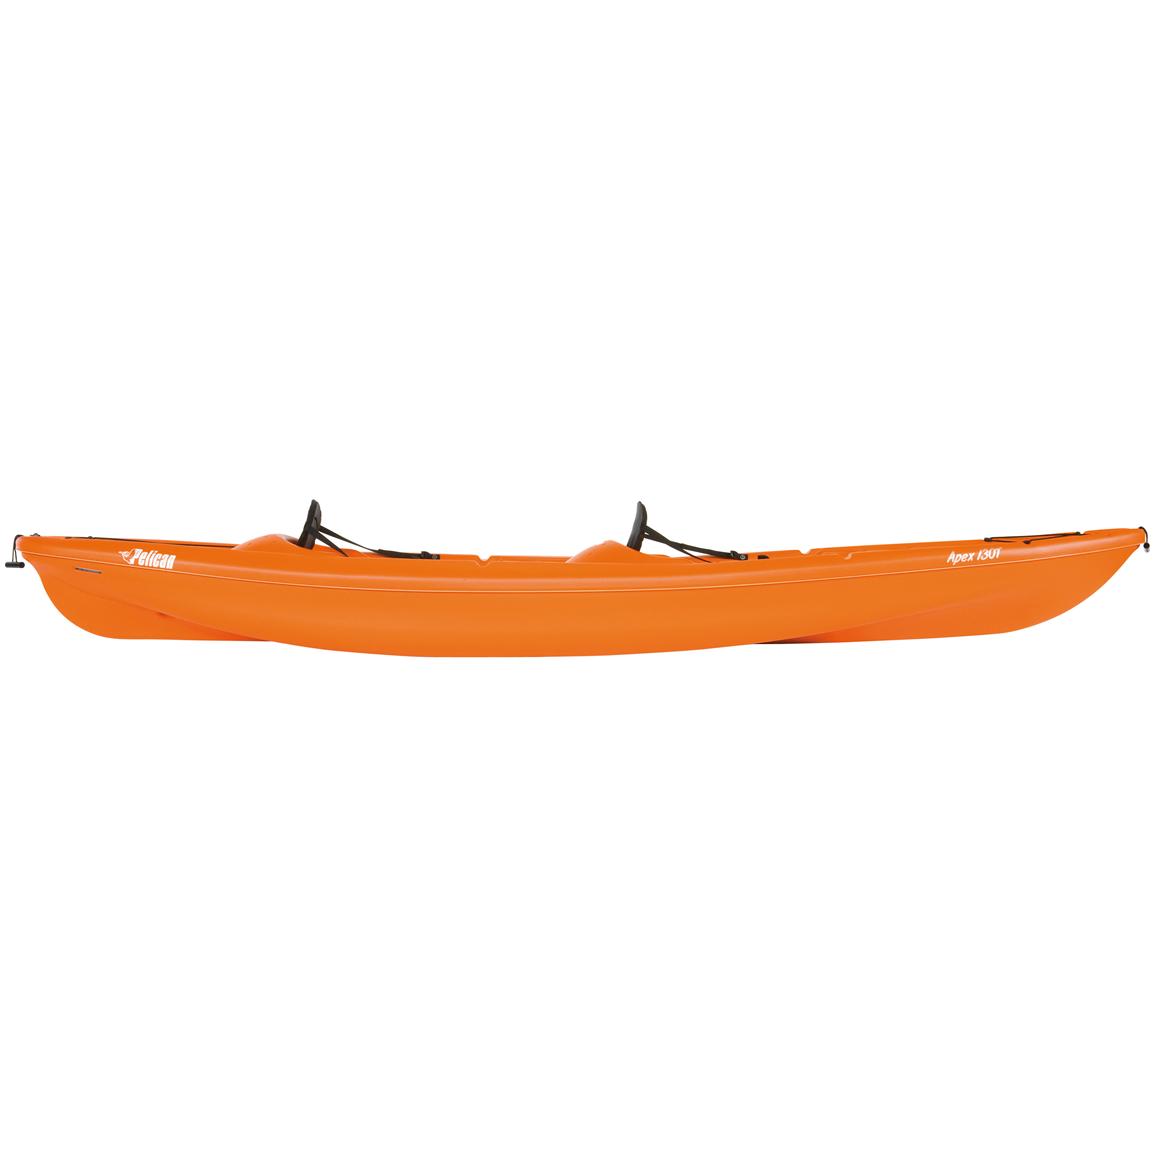 Pelican™ Apex 130T Kayak, Orange - 183756, Canoes & Kayaks at Sportsman's Guide